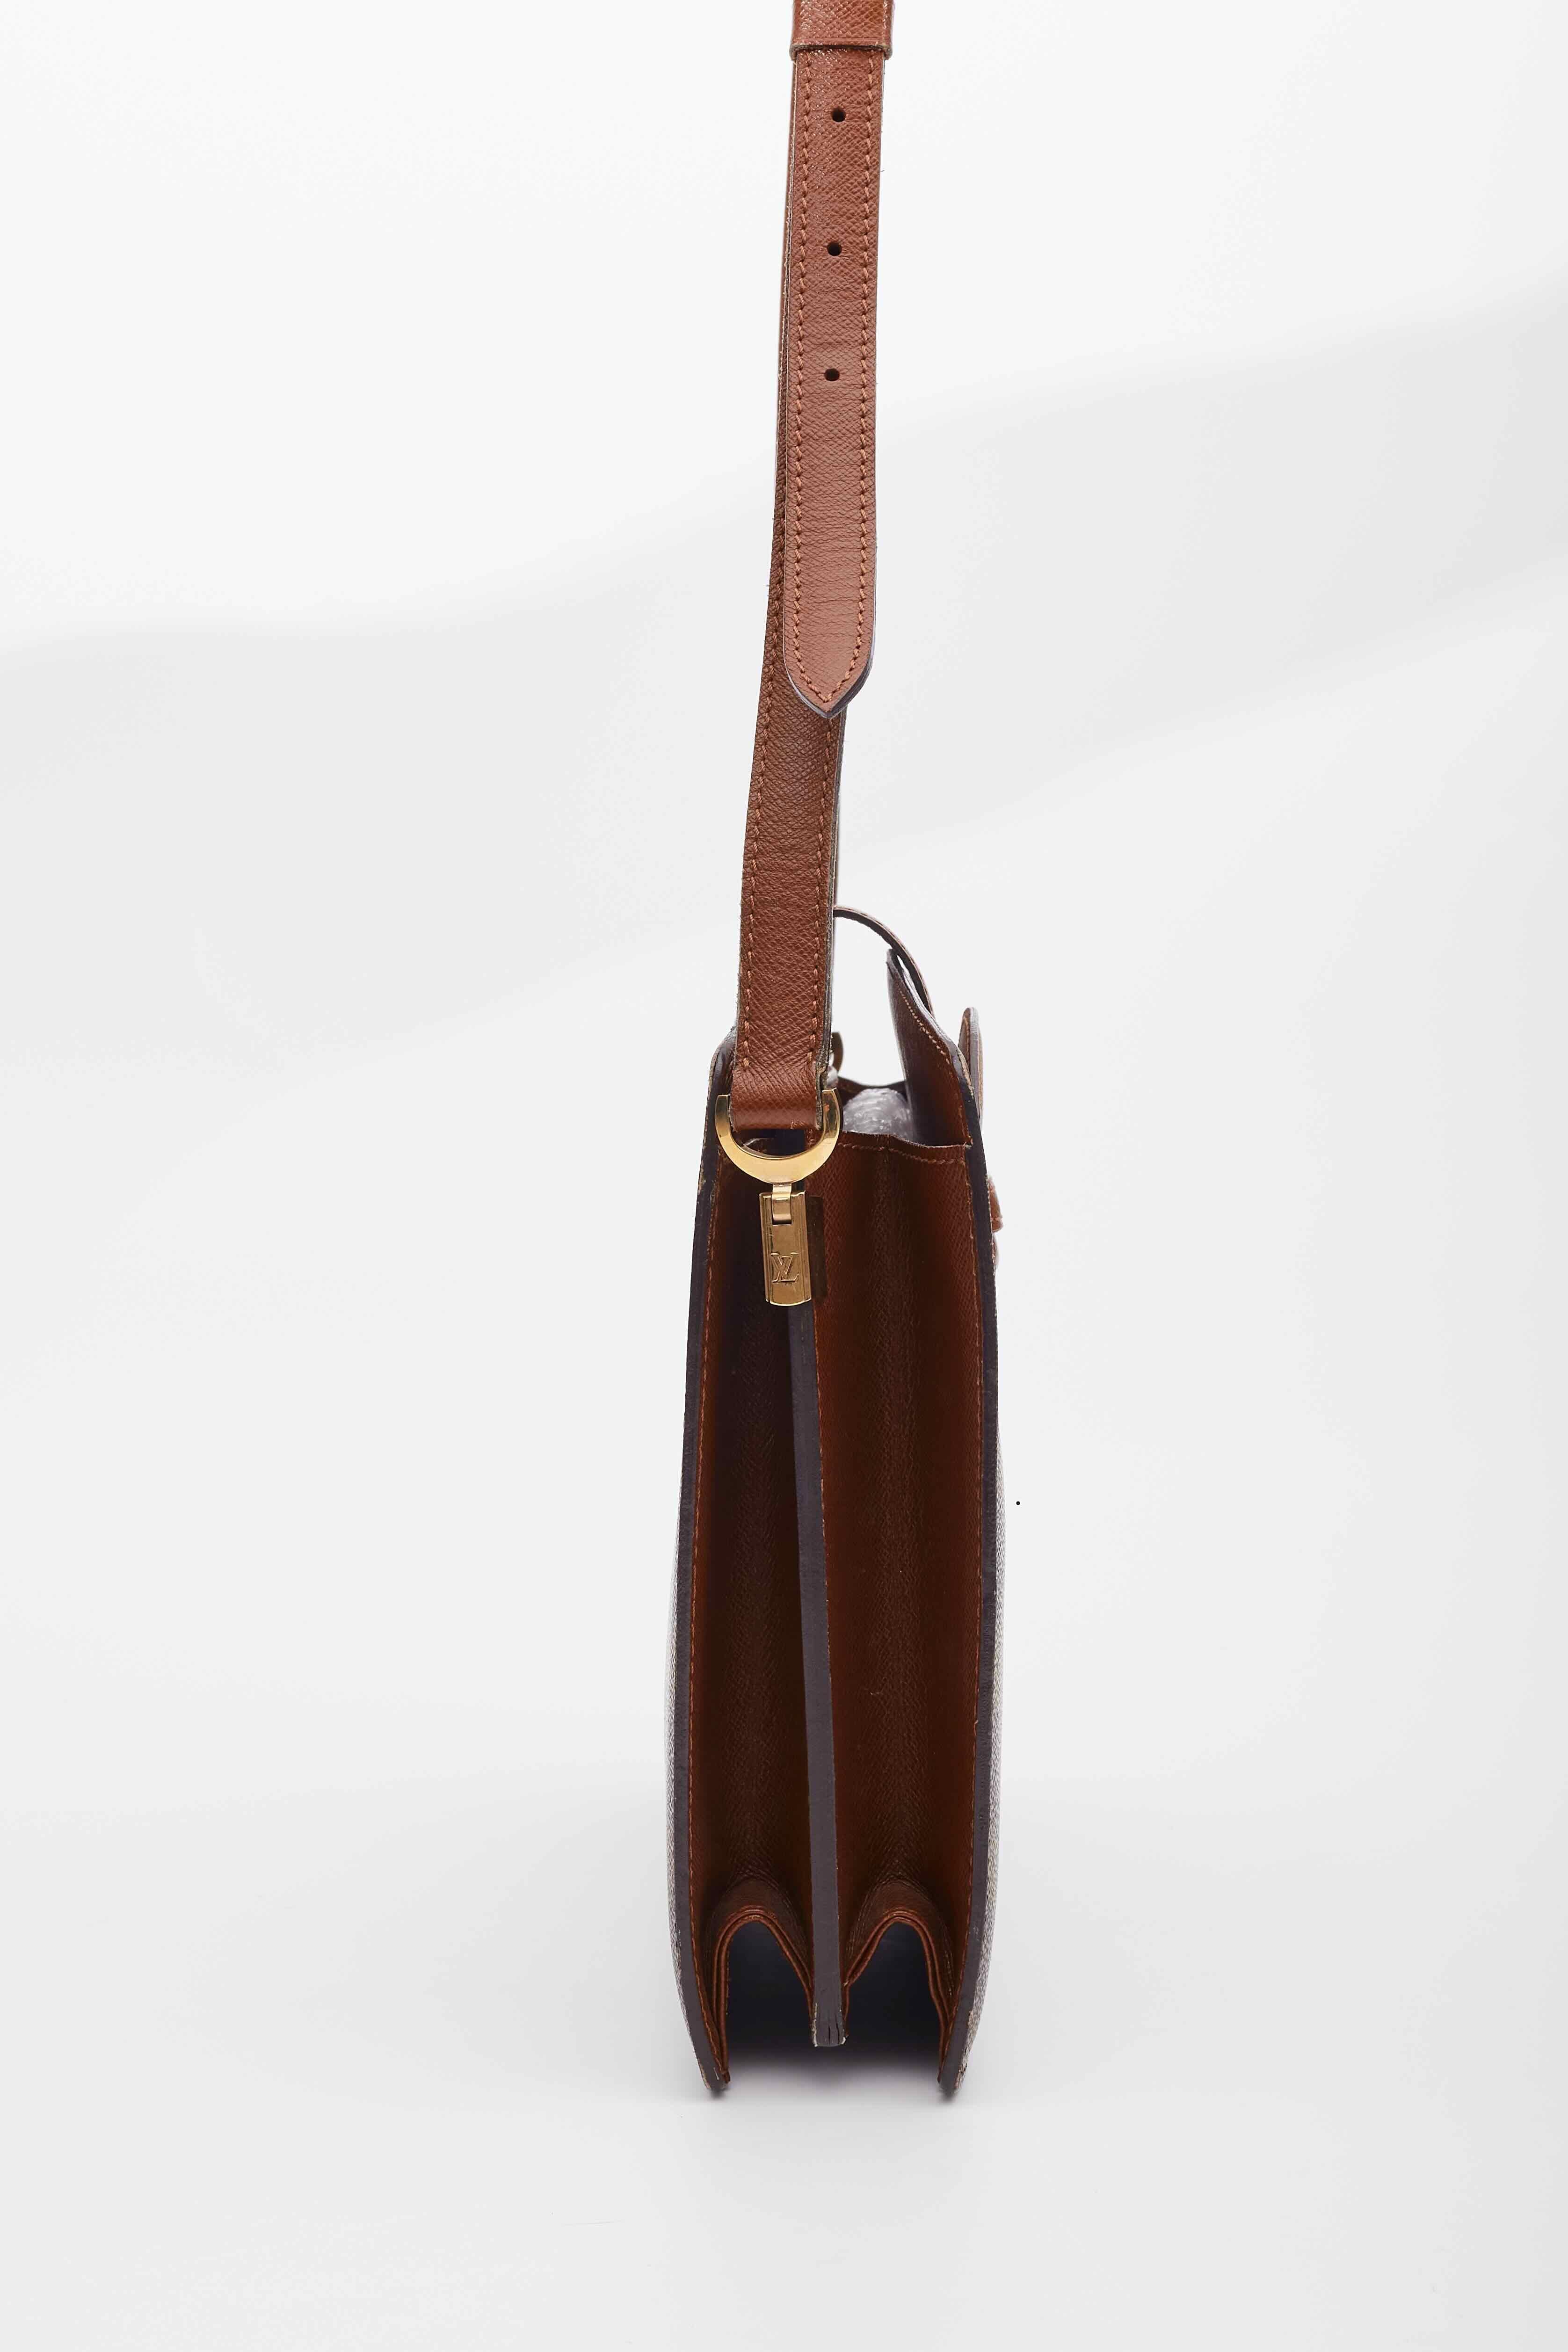 Louis Vuitton Vintage Monogram Courcelles Shoulder Bag In Good Condition For Sale In Montreal, Quebec